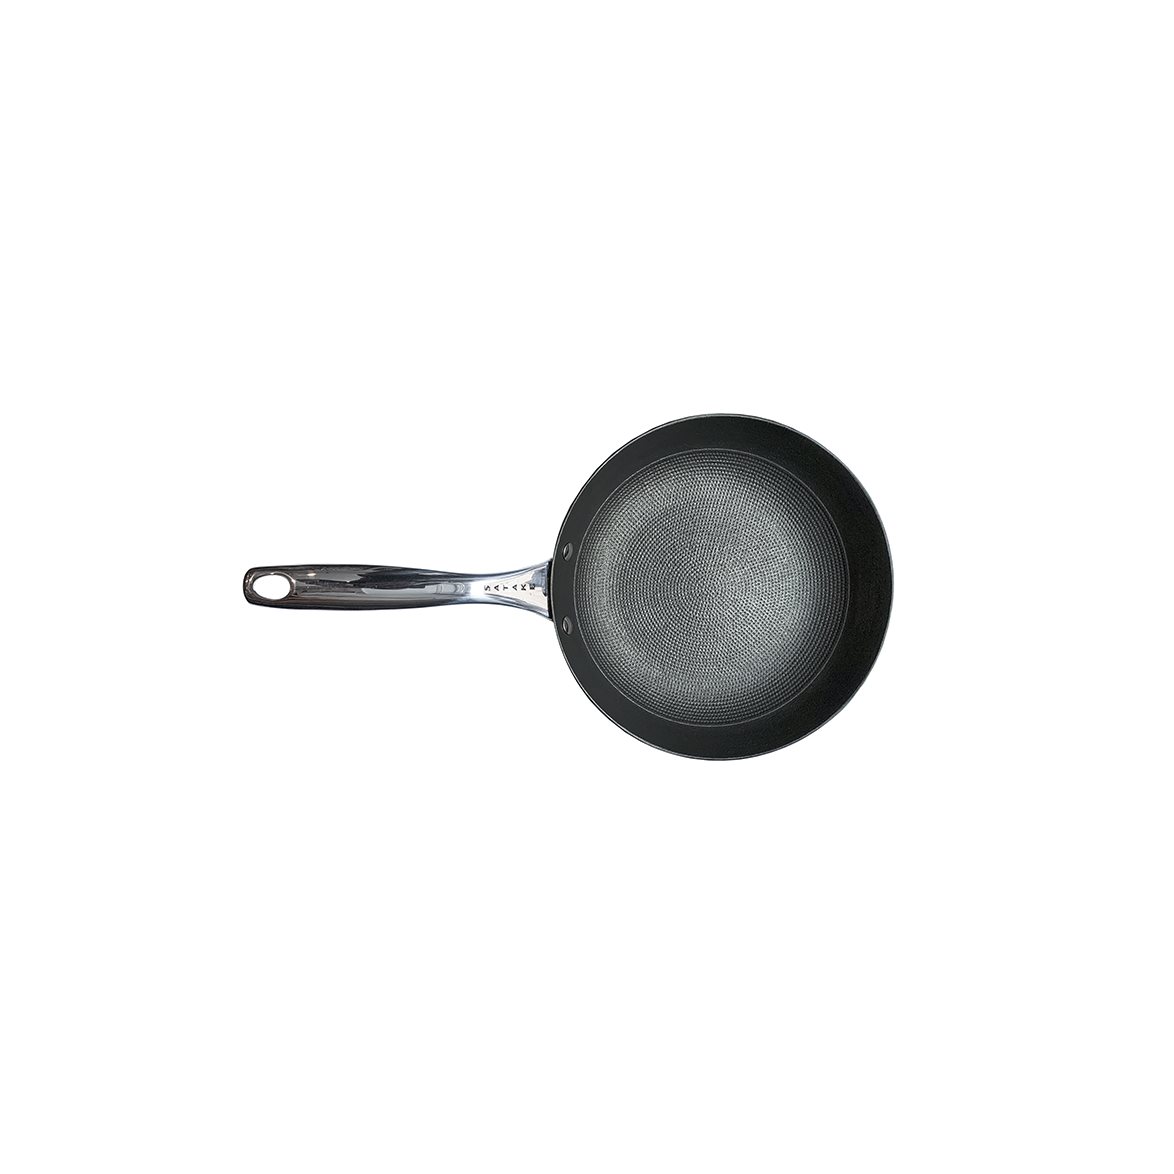 Source Non-stick lightweight cast iron wok with honeycomb design